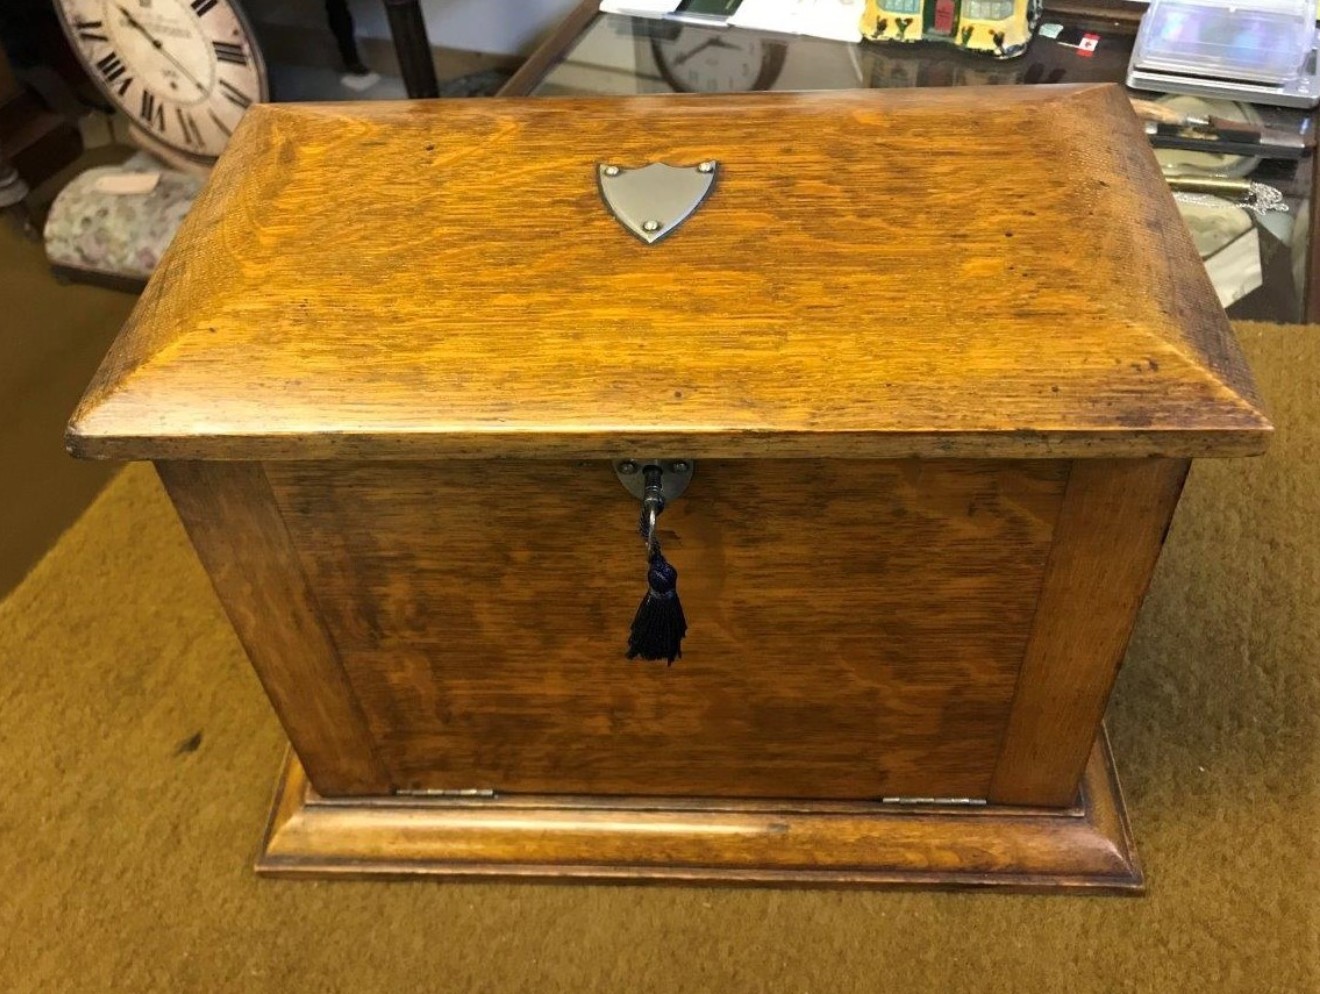 Edwardian Tiger Oak Fall Front Stationery Box / Writing Case